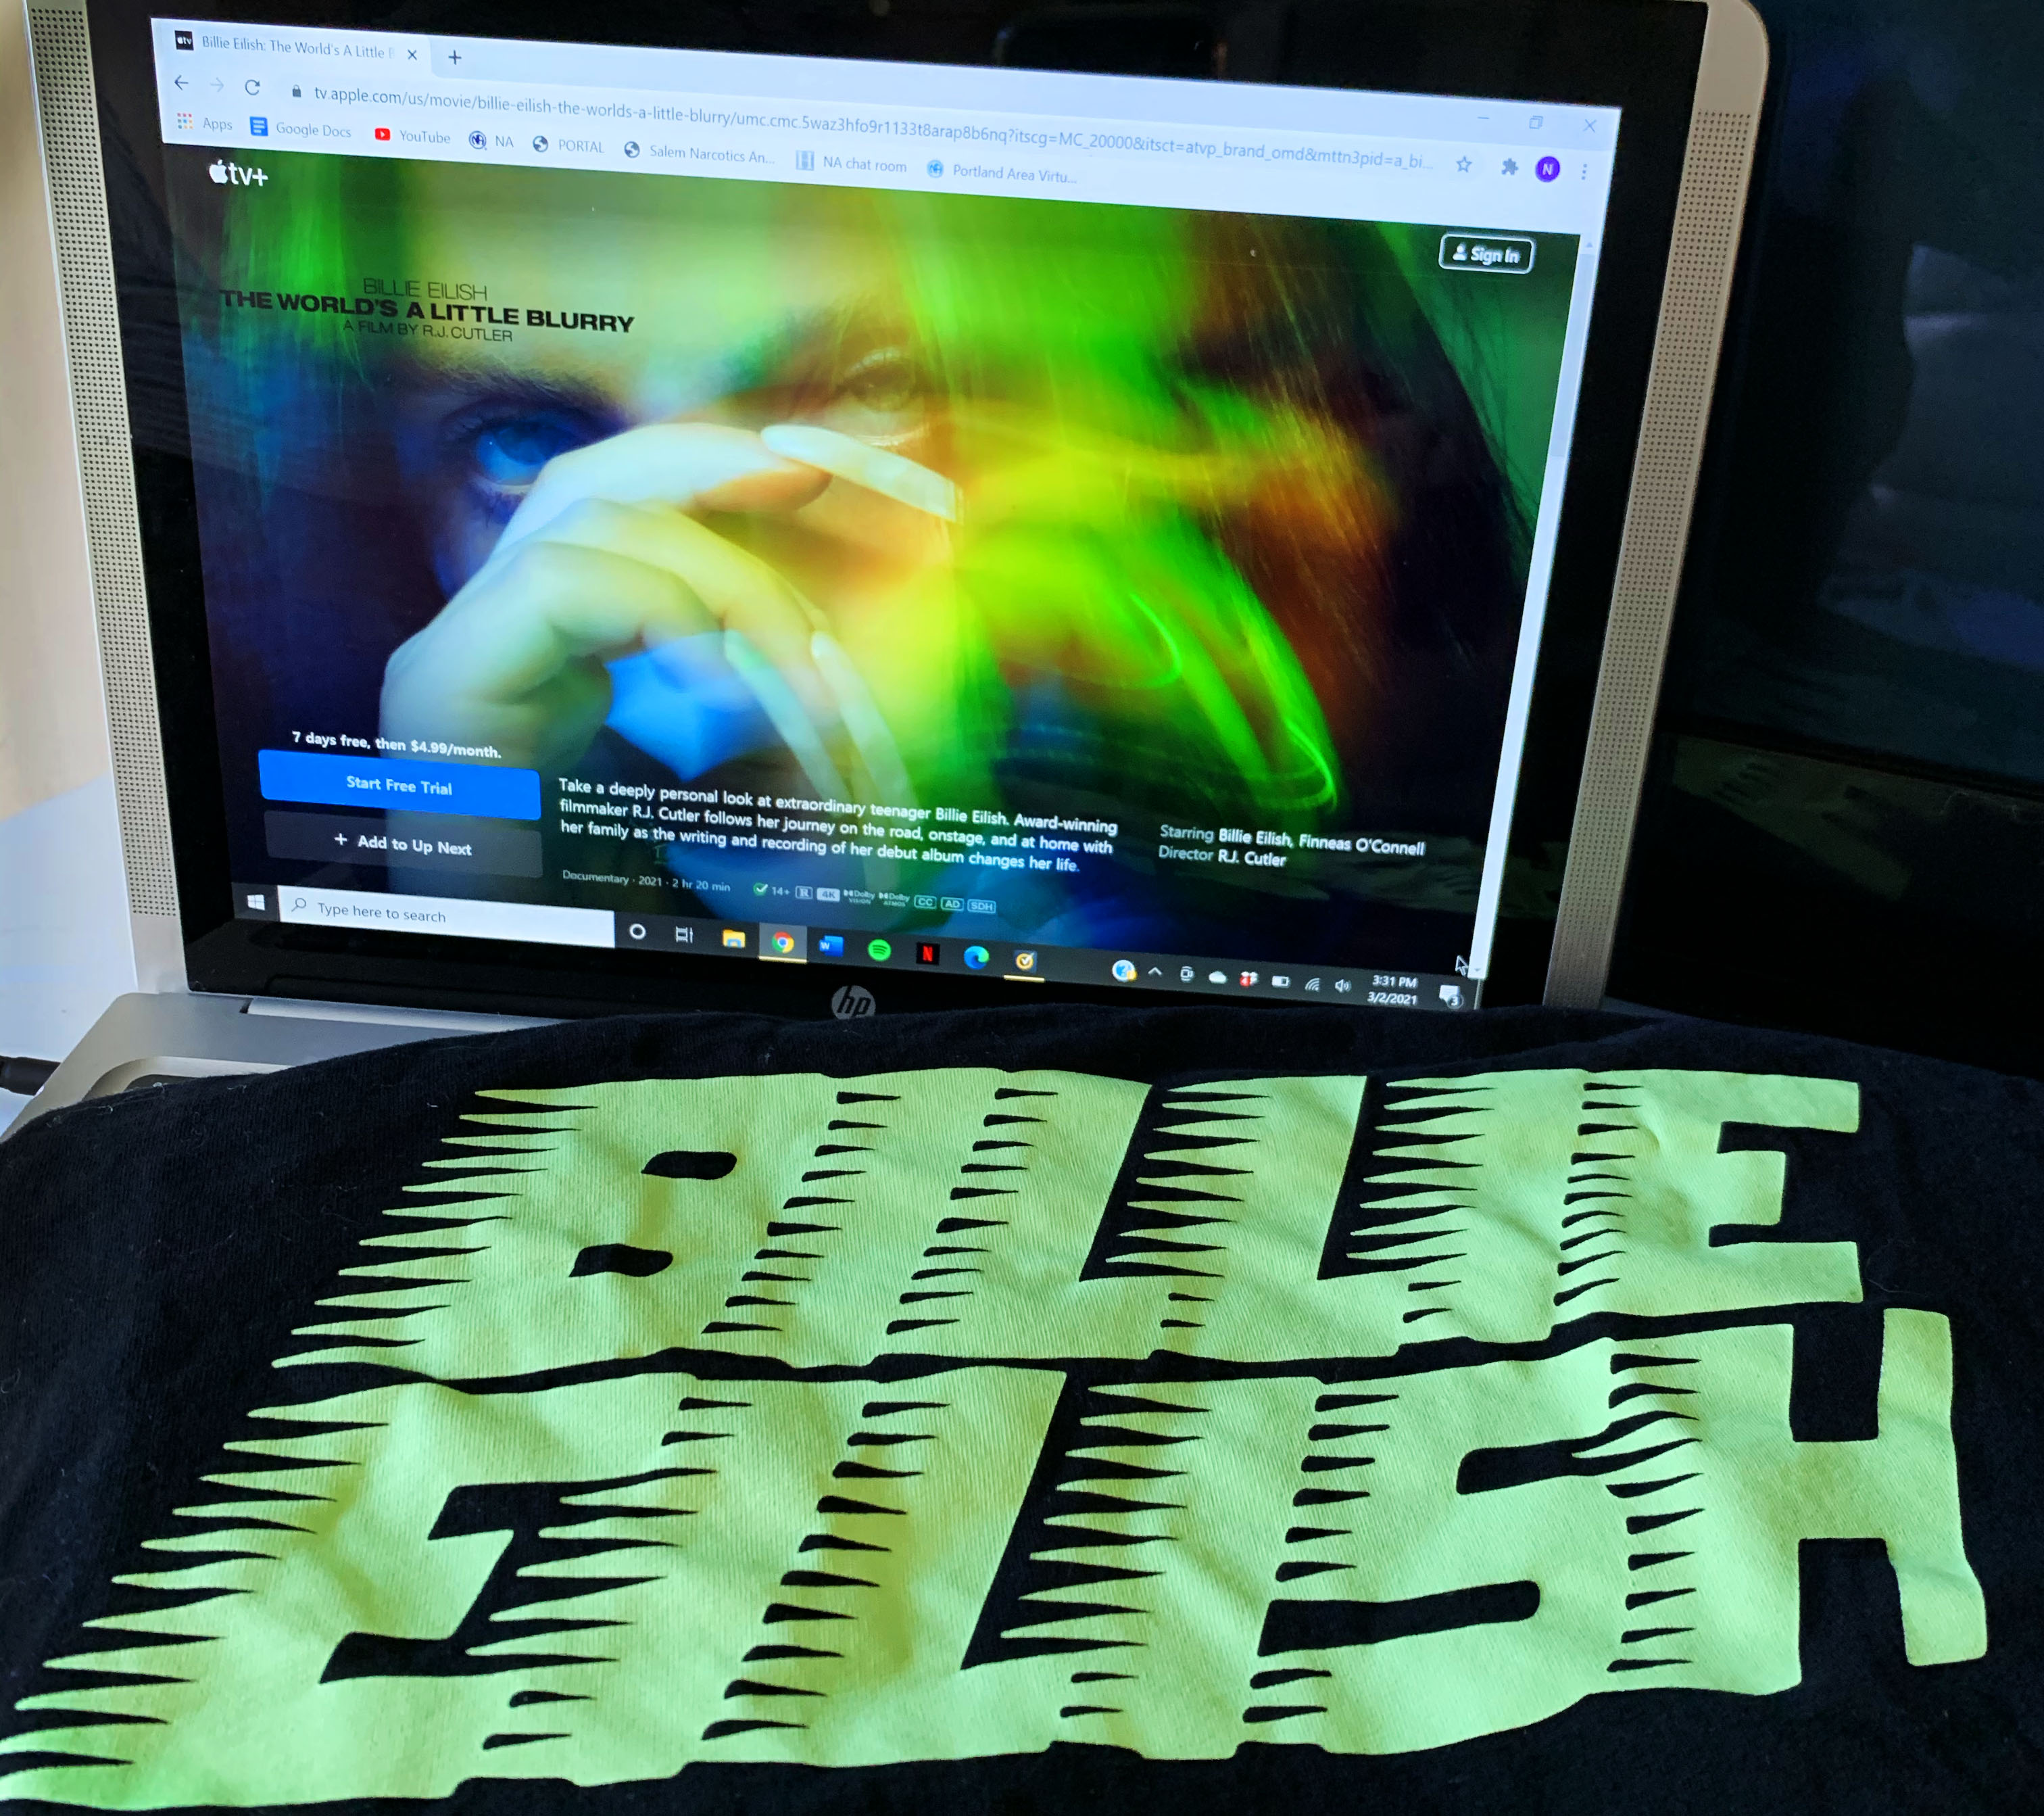 AppleTV+ presents Billie Eilish’s latest artistic creation